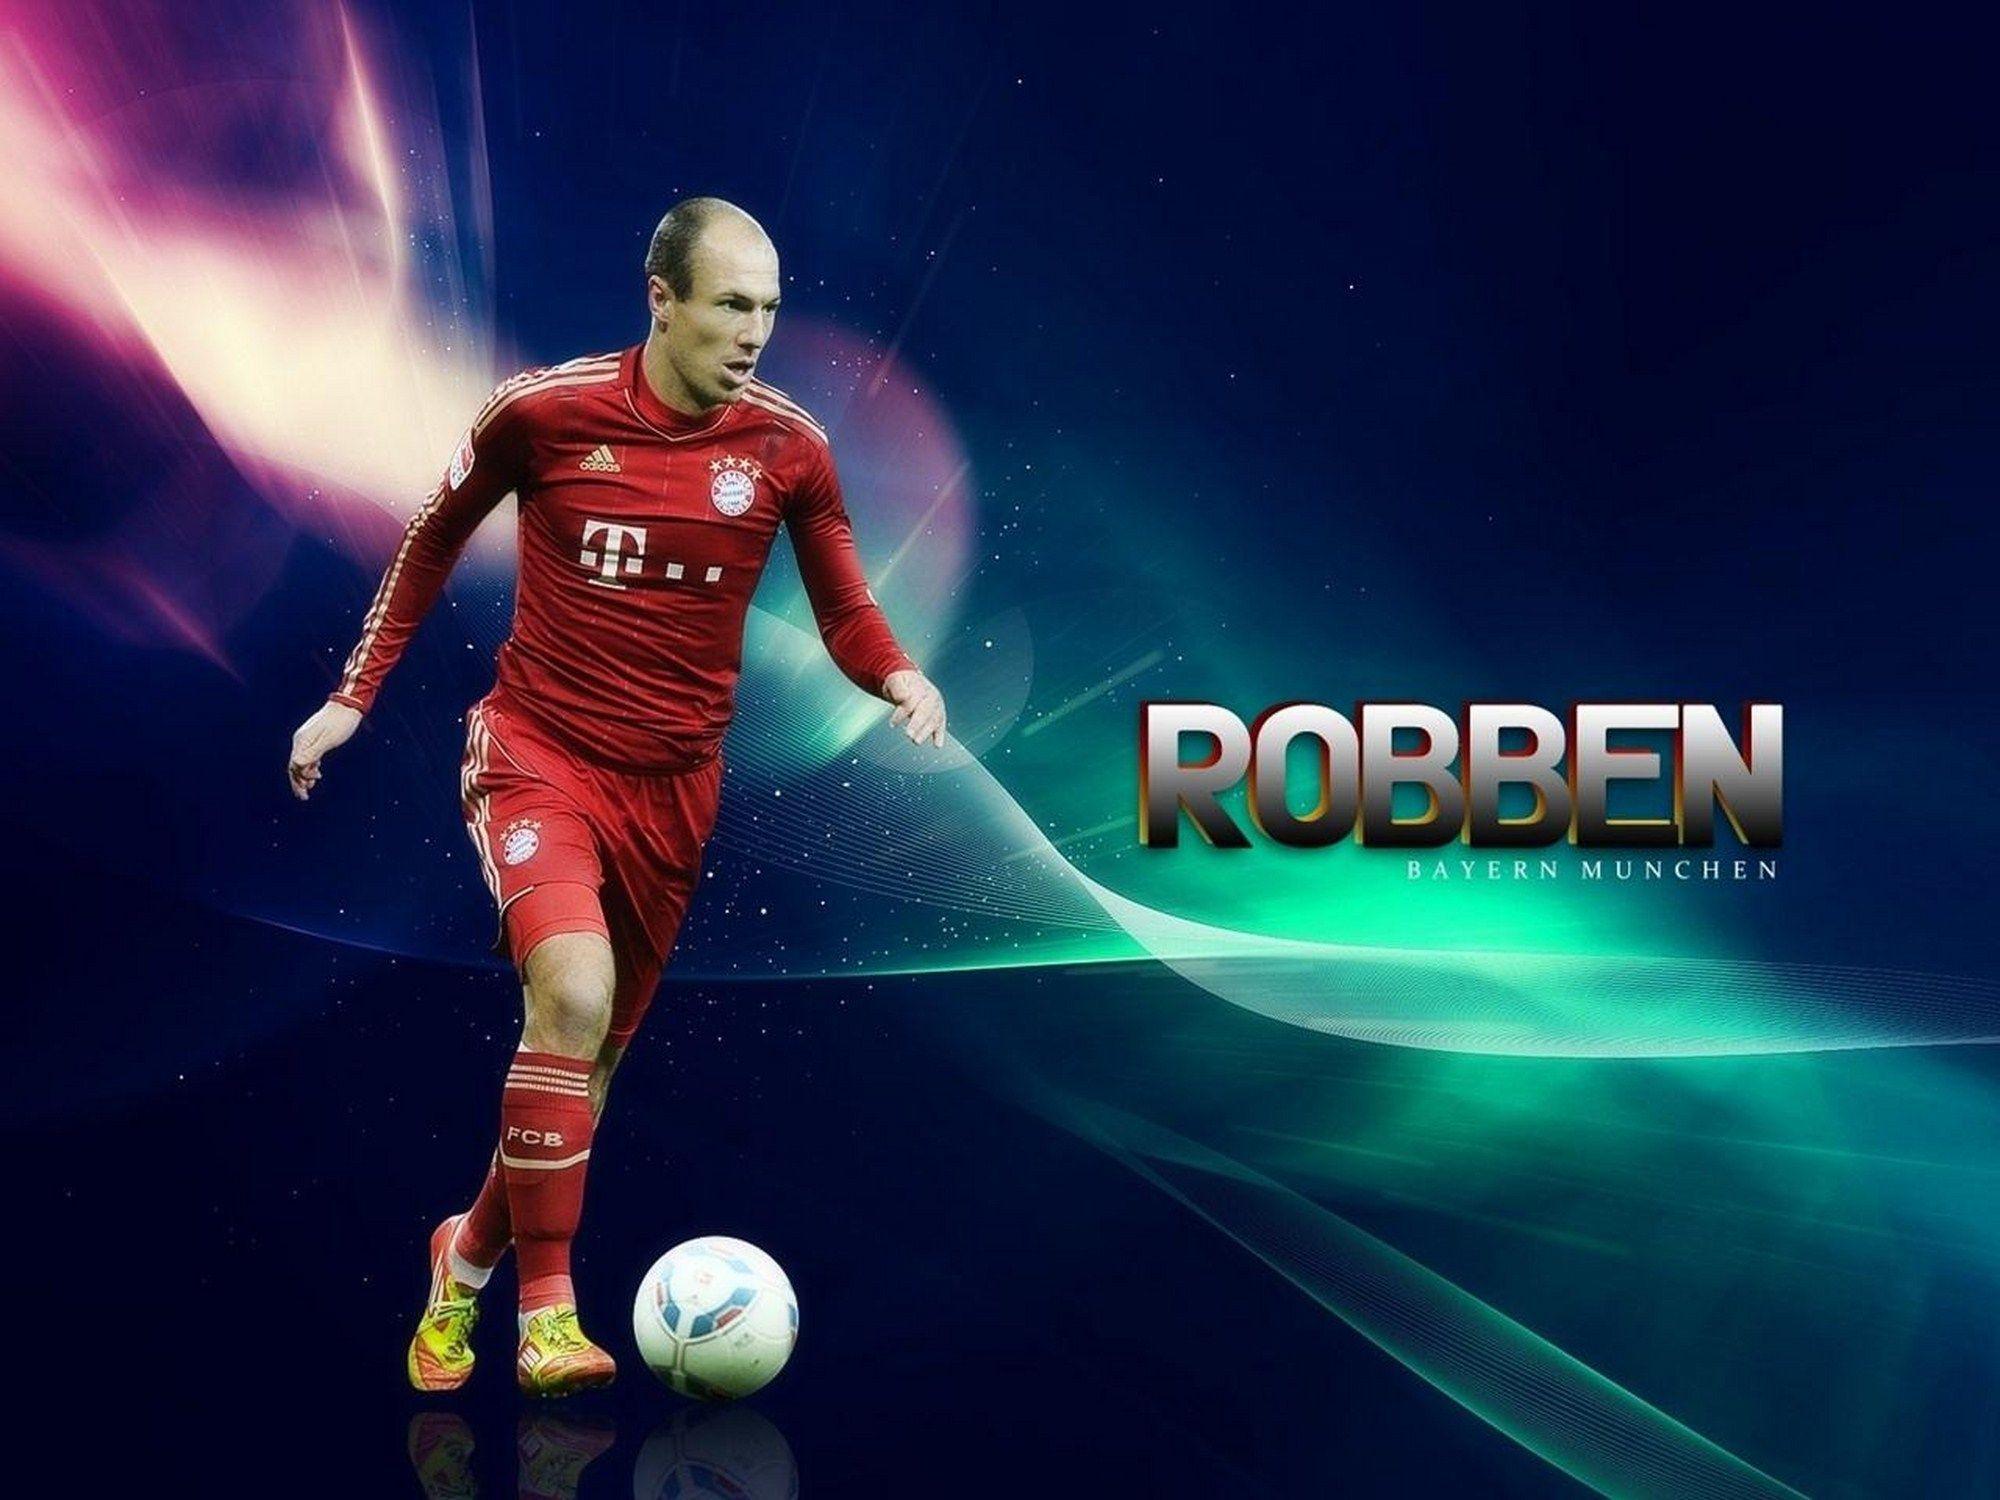 Arjen Robben HD Wallpaper And Photo download